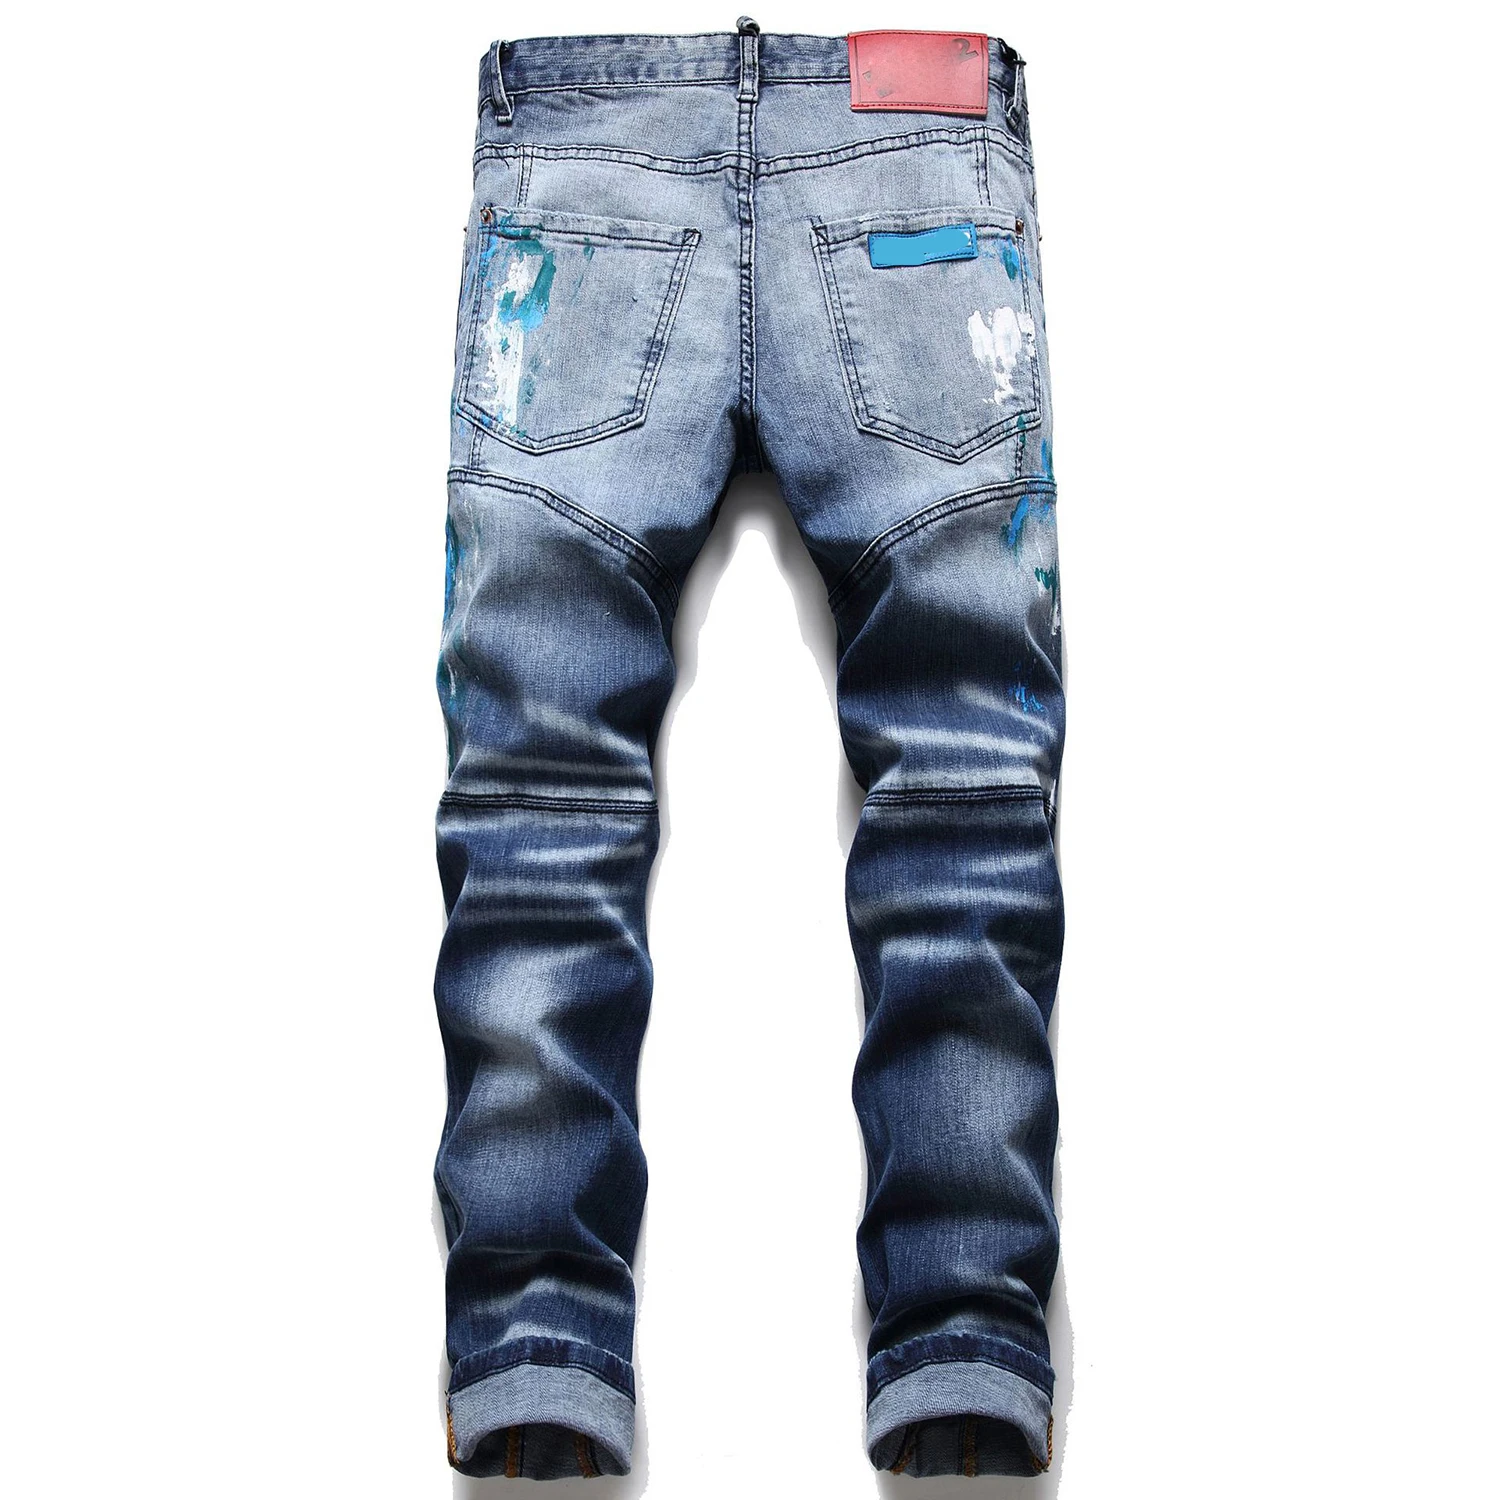 Light Luxury Men’s Color Graffiti Paint Denim Pants,High Quality Slim-fit Ripped Jeans,Street Fashion Casual Jeans Pants; images - 6